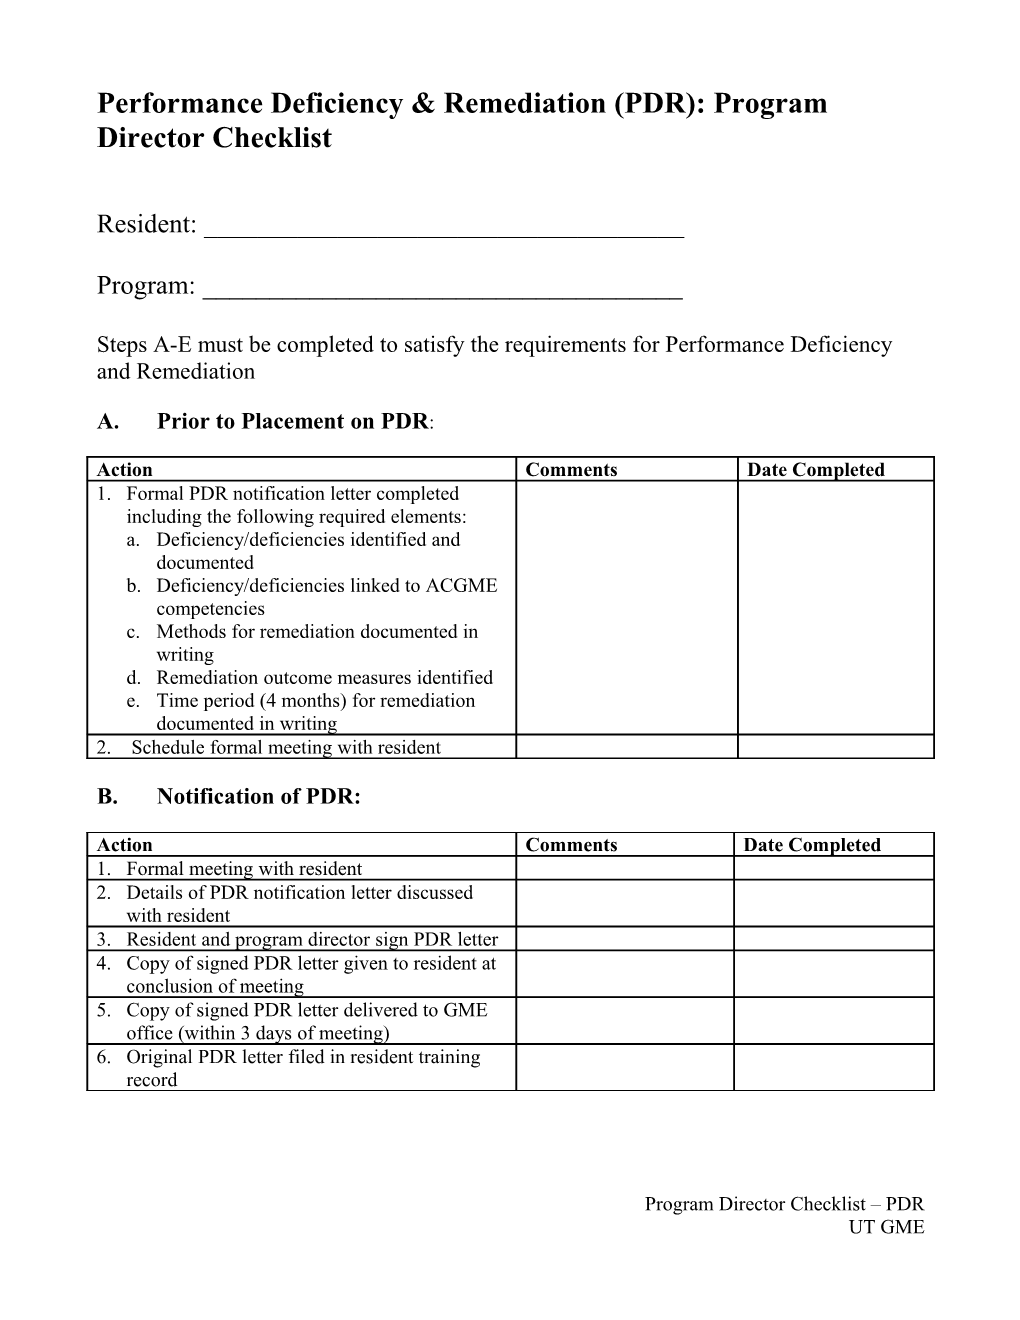 Academic Deficiency & Remediation (ADR): Program Director Checklist